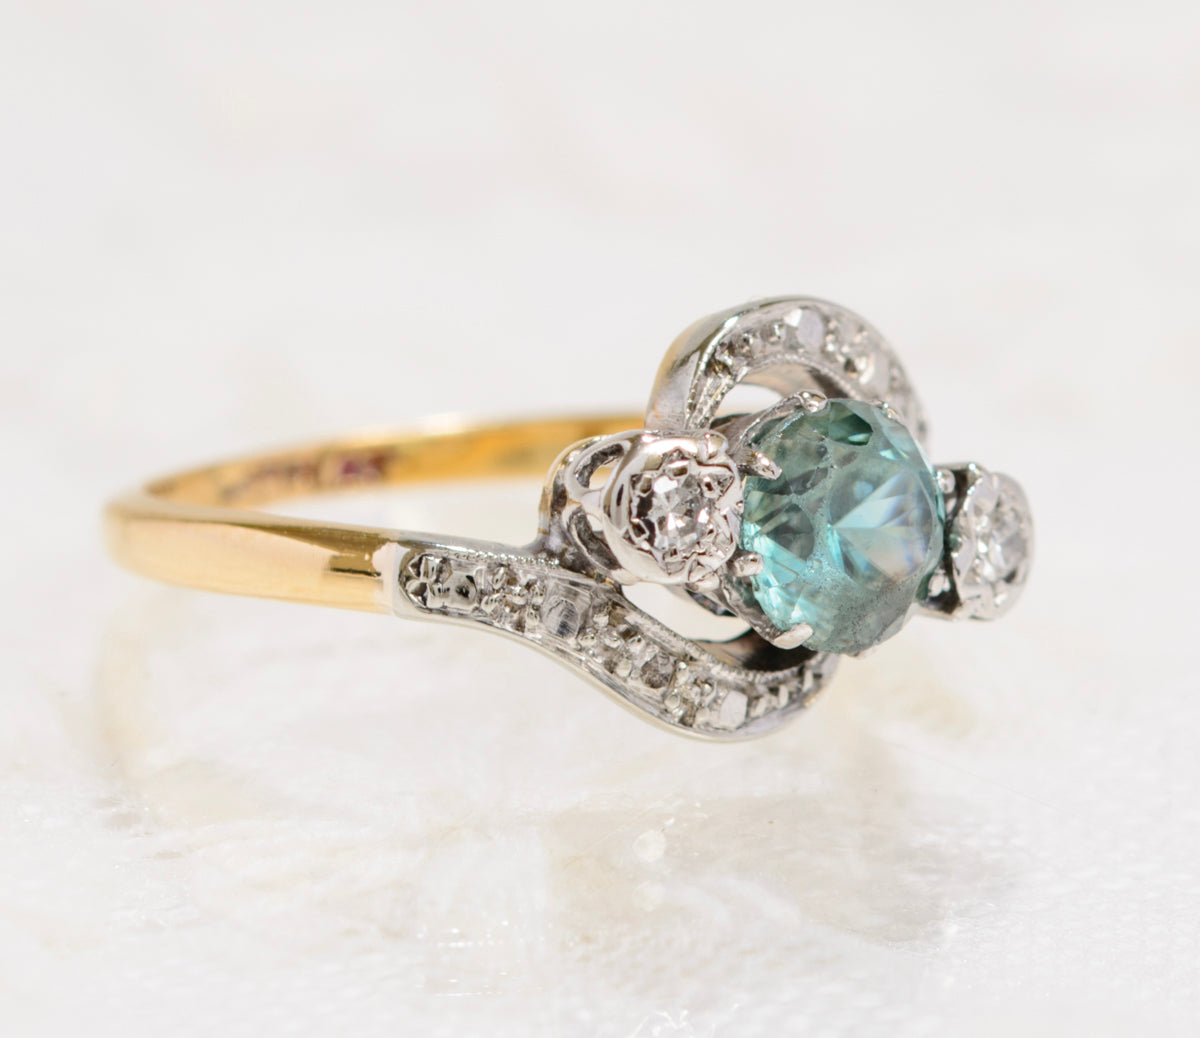 Art Deco 18ct Gold & Platinum Ring With Natural Blue Zircon & Diamonds UK Size K (A1861)